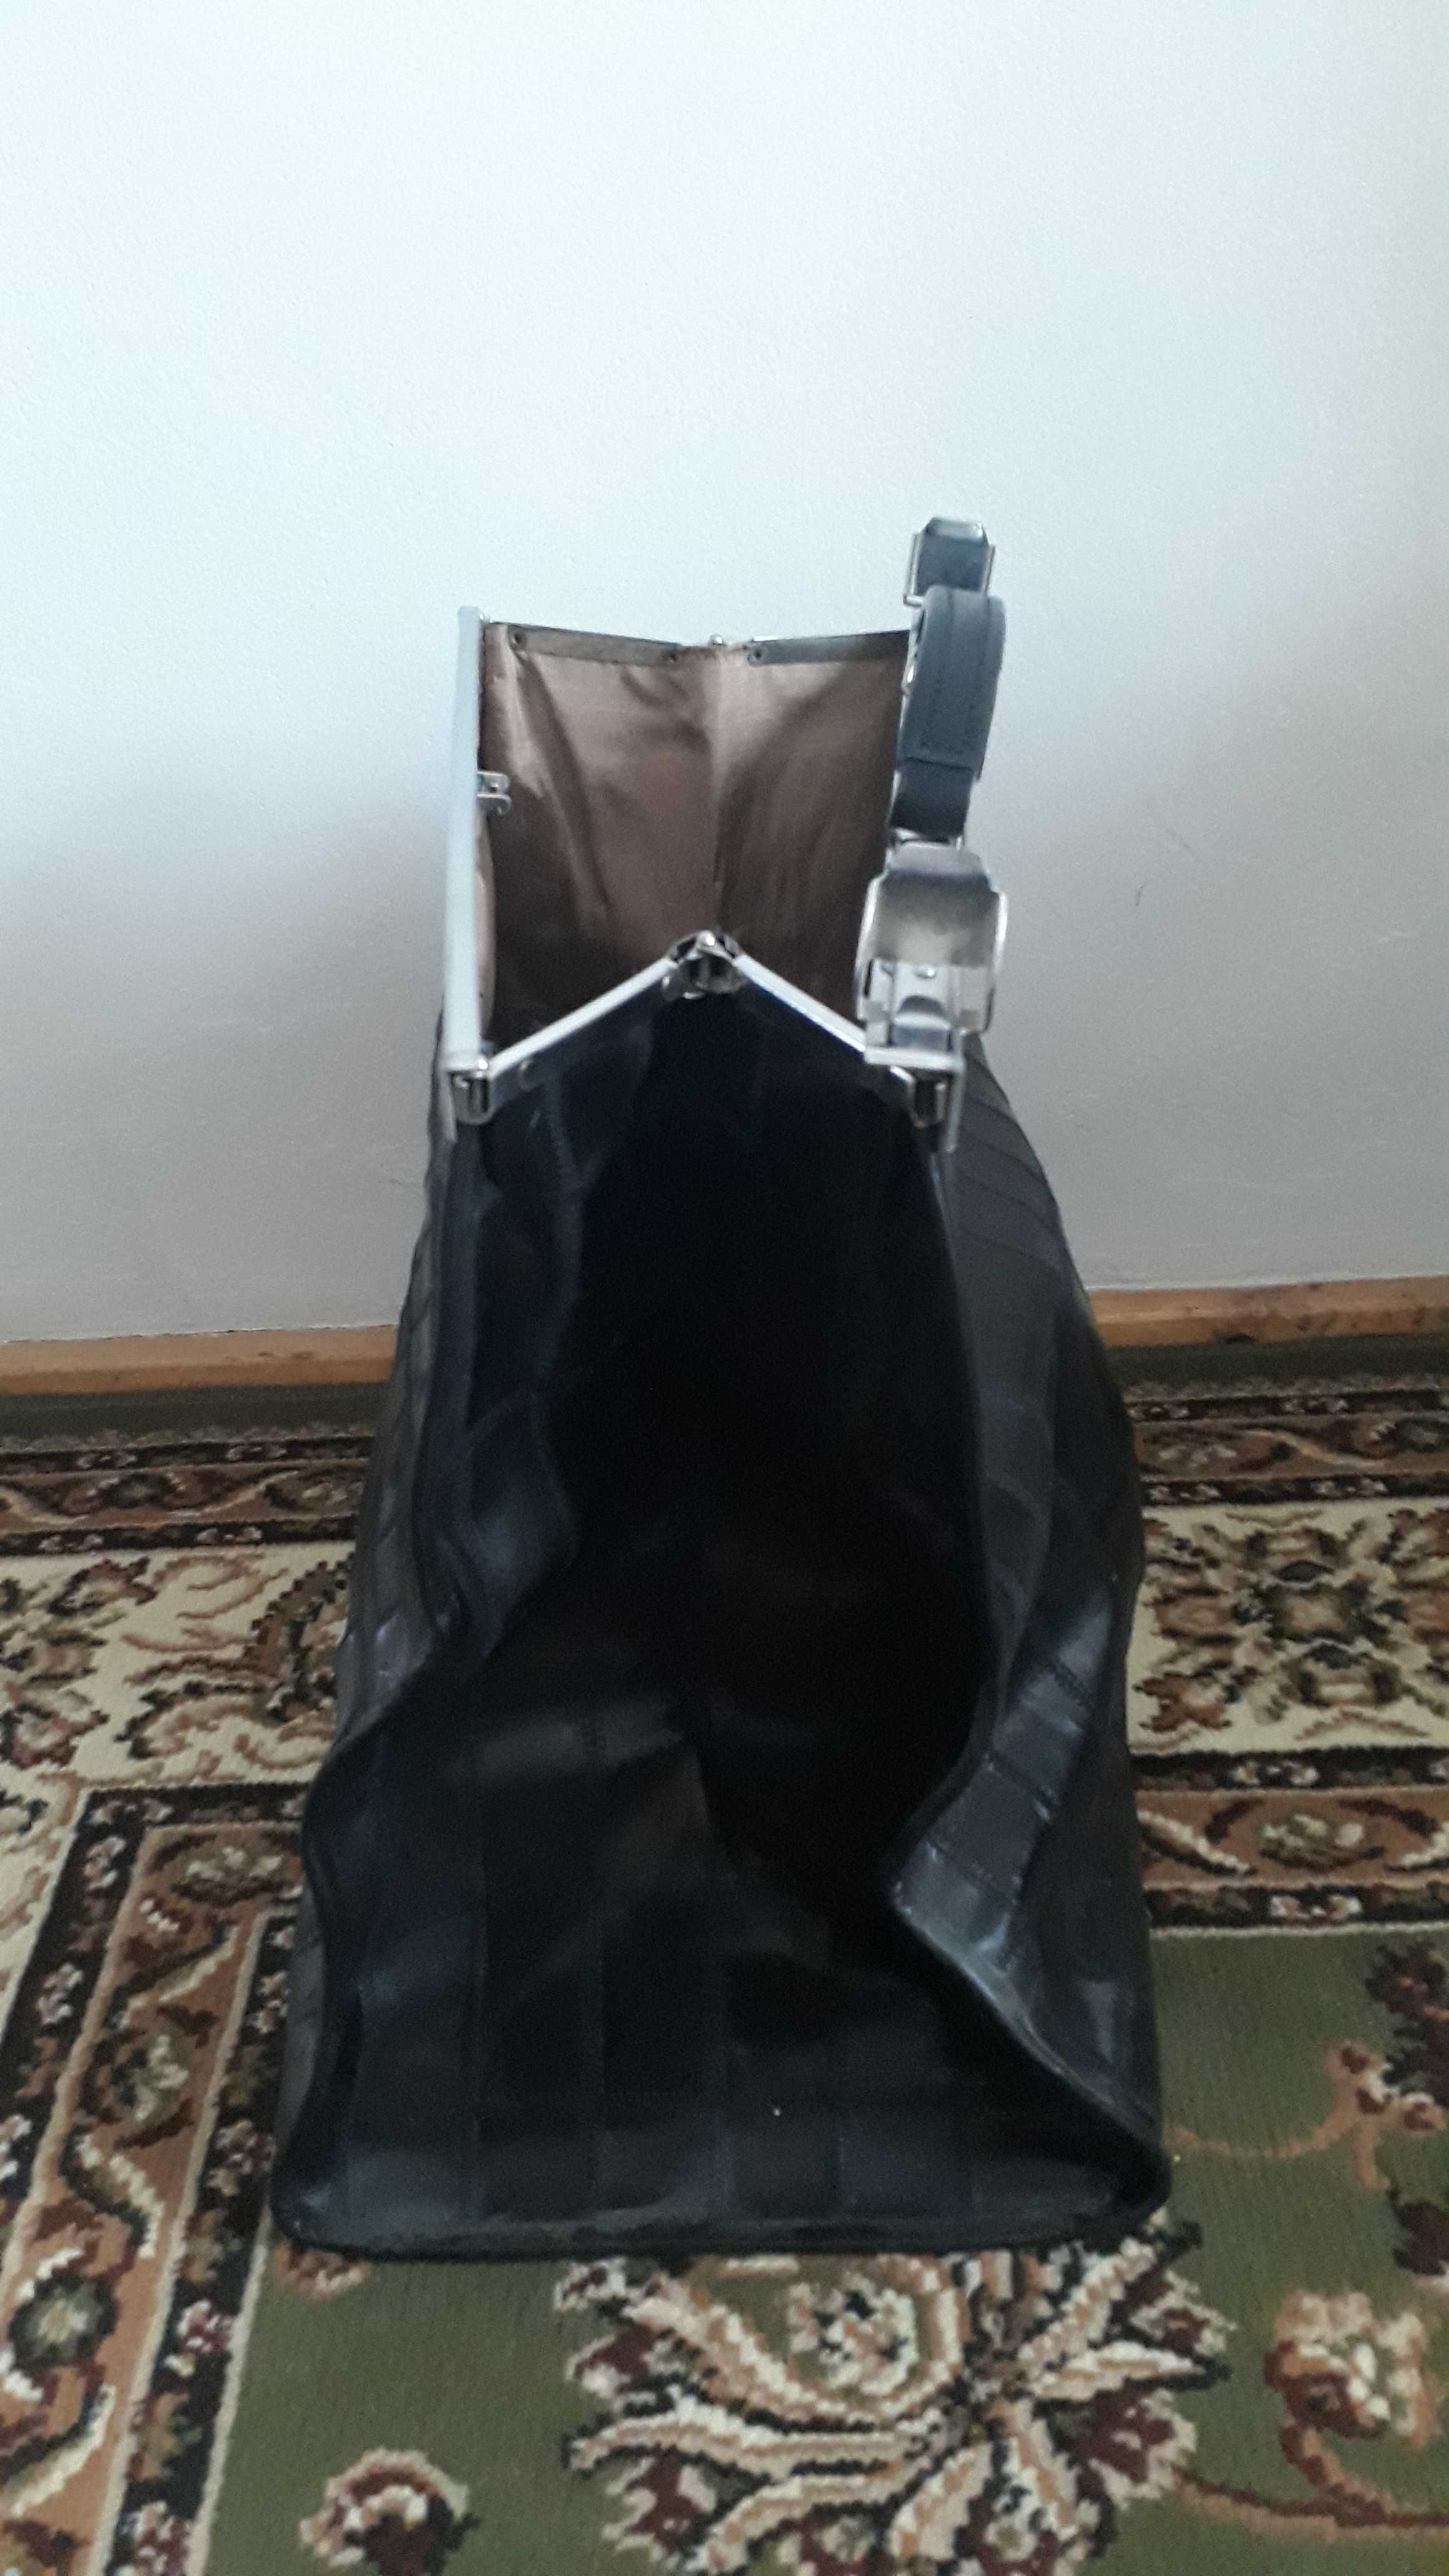 Czarna skórzana torba